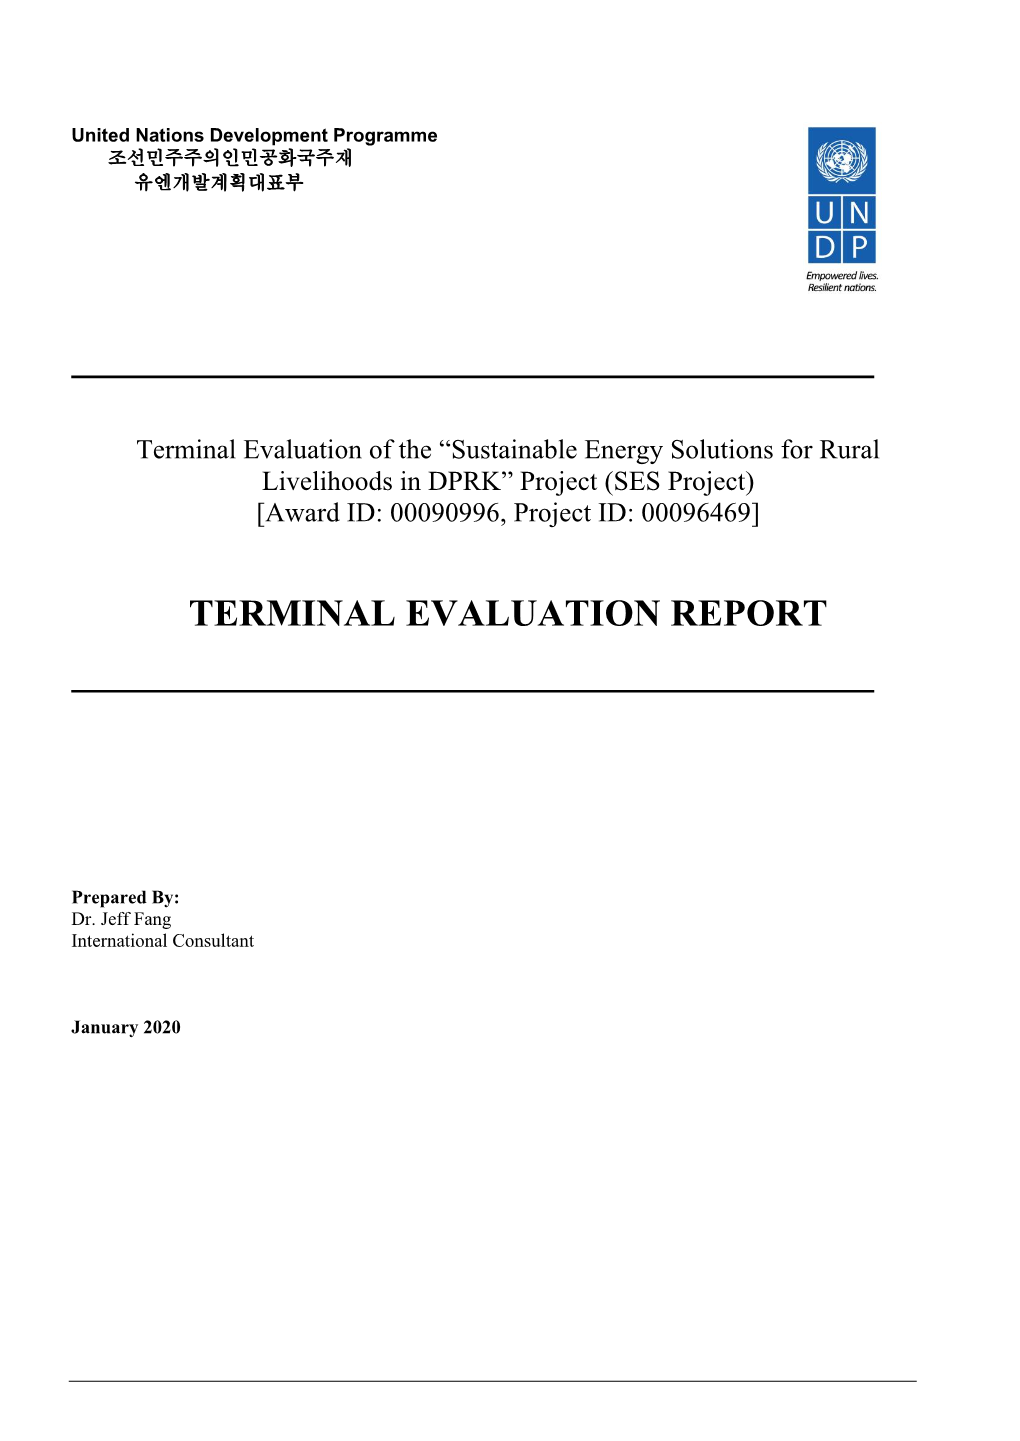 UNDP DPRK SES Terminal Eval Report 22Jan2020 Final Summary.Pdf